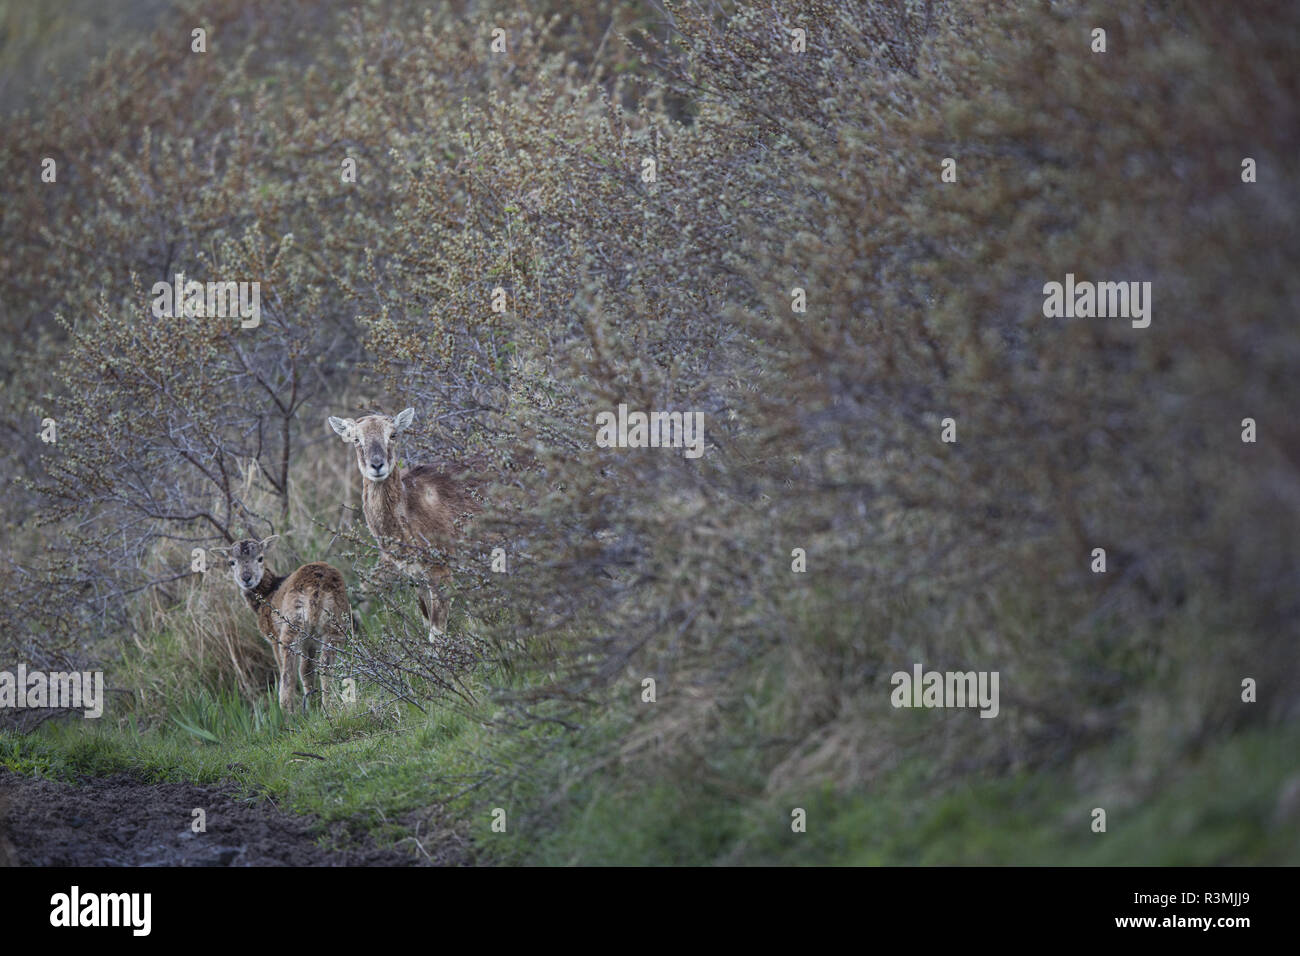 European mouflon (Ovis gmelini musimon) Introduced in Baie de Somme, Baie de Somme Nature Reserve, Picardie, France Stock Photo